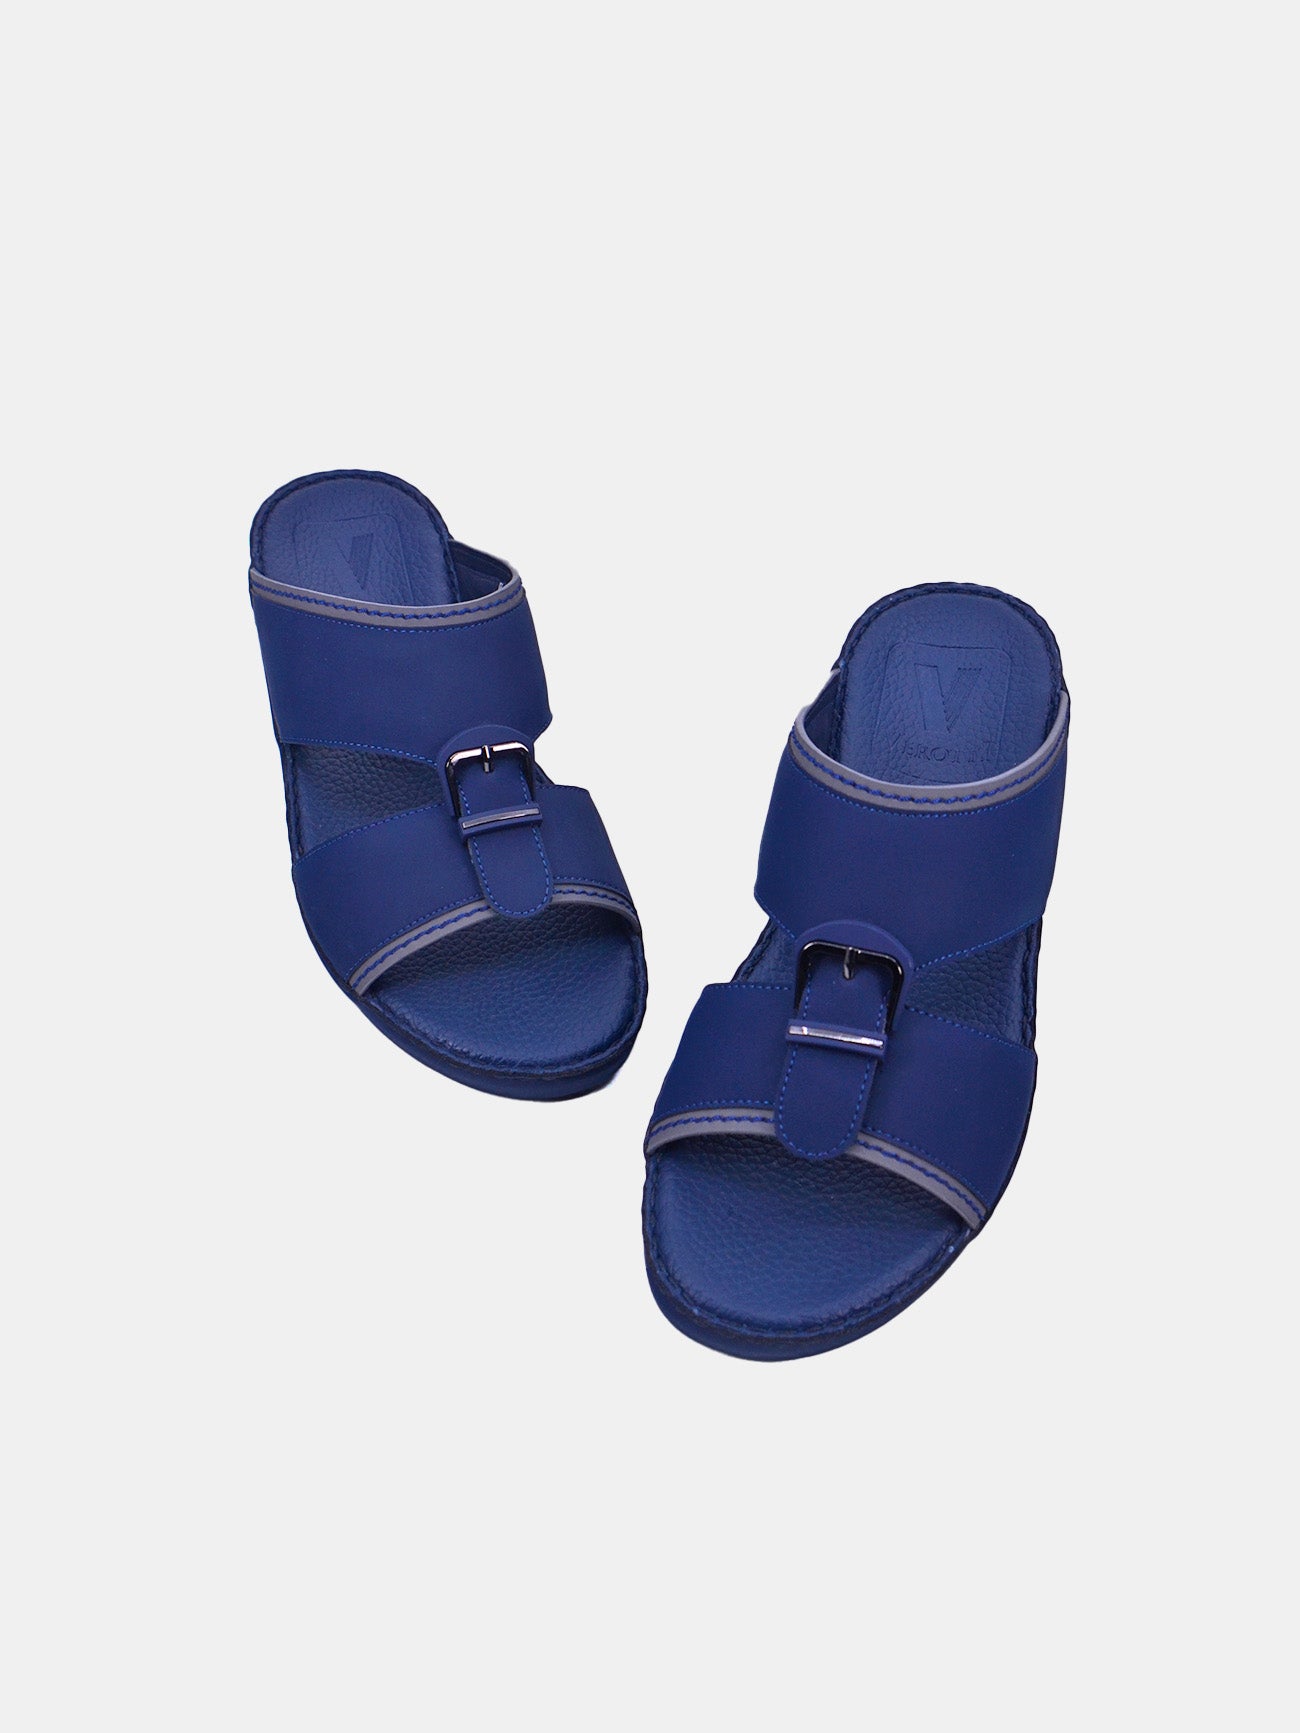 Verotti VT-174 Men's Arabic Sandals